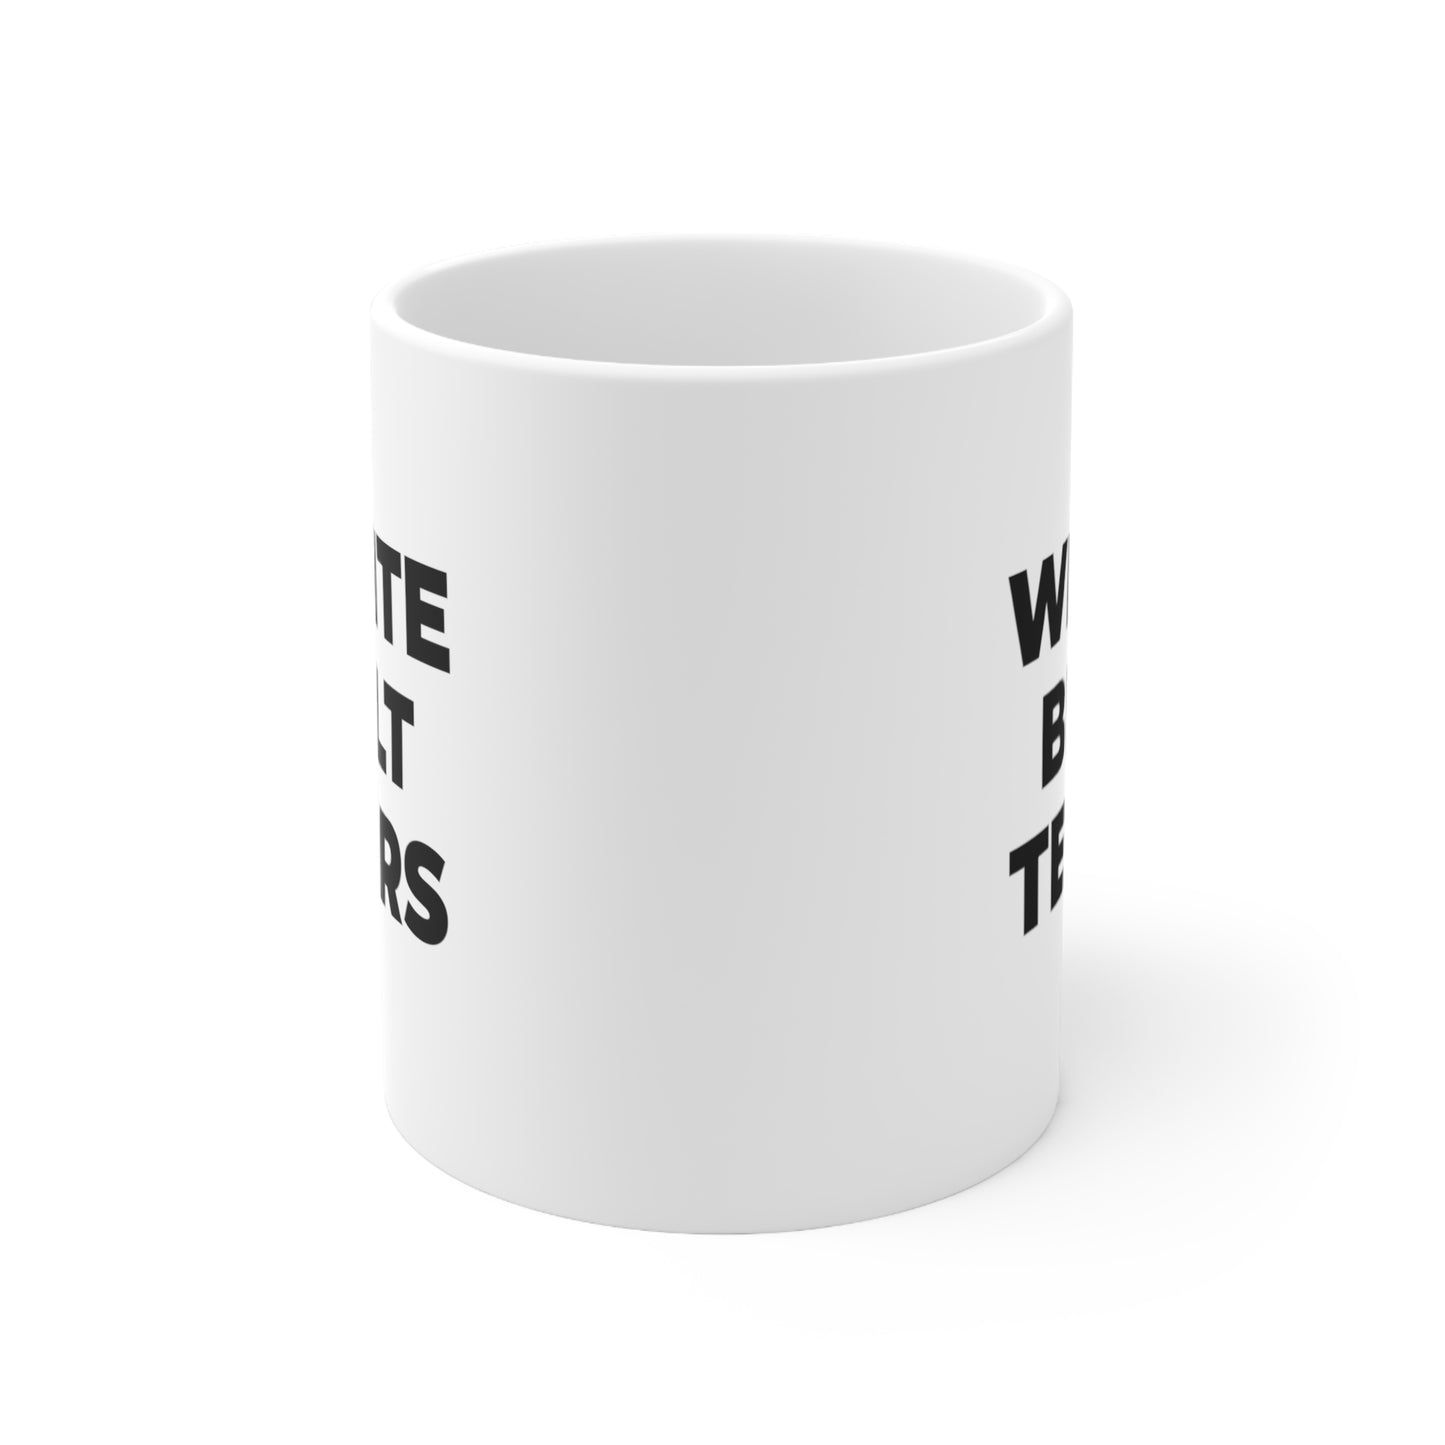 White Belt Tears Coffee Mug 11oz